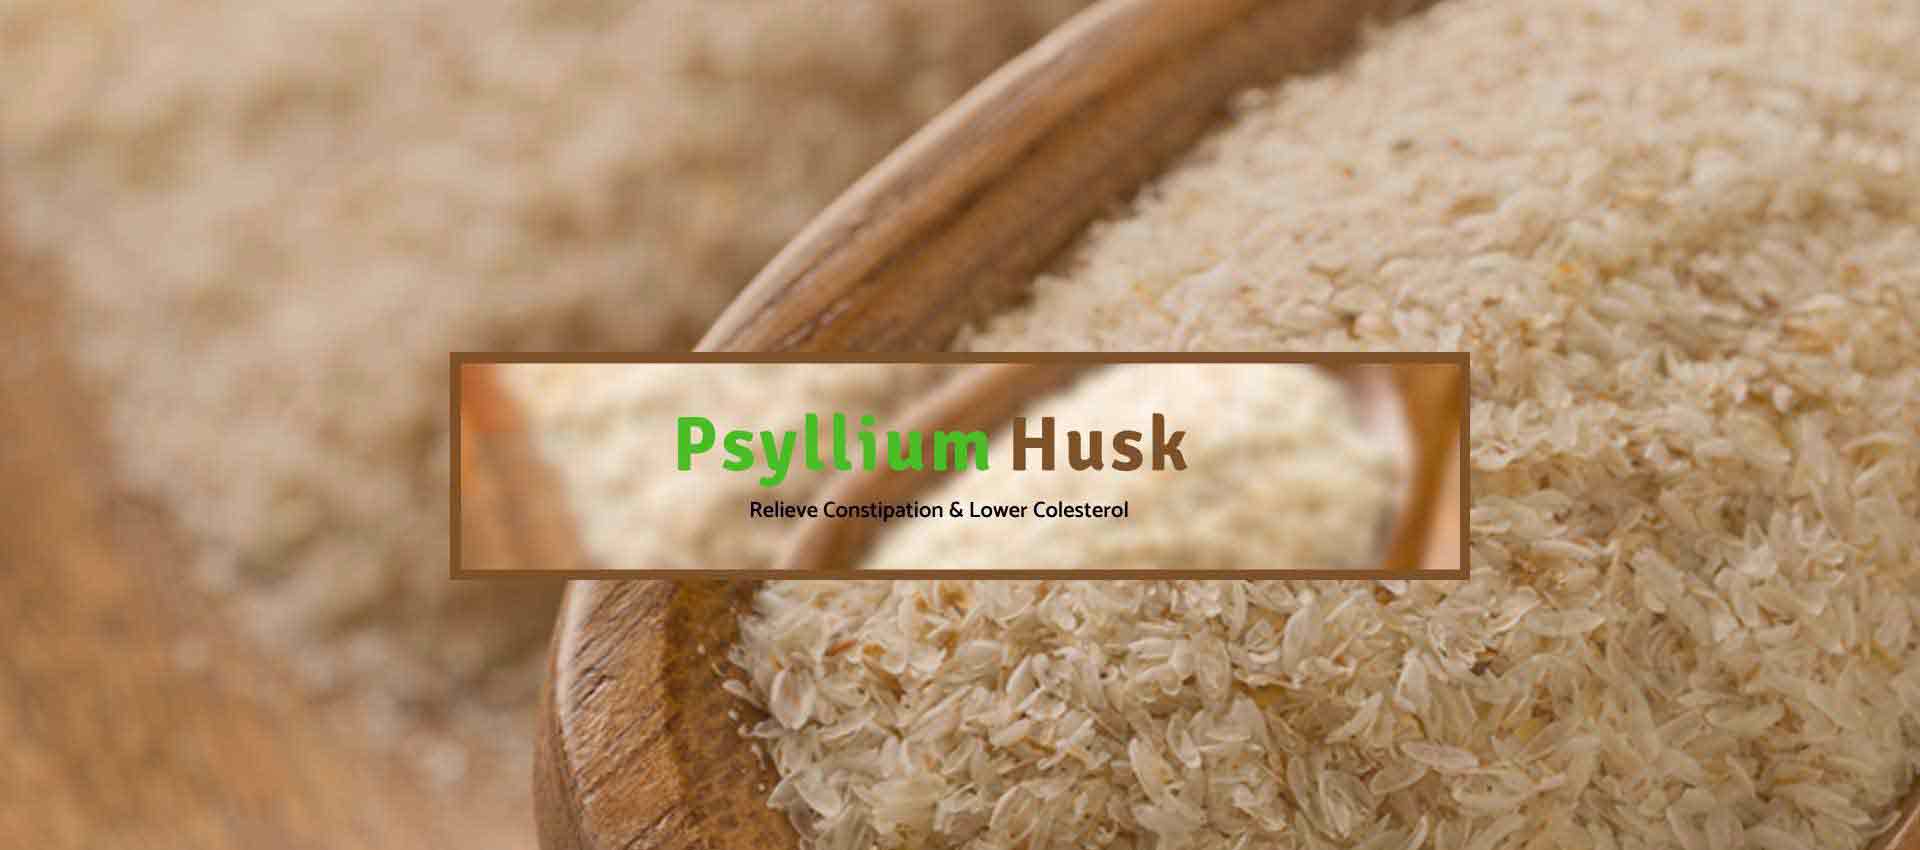 Psyllium Husk Manufacturers in Poland